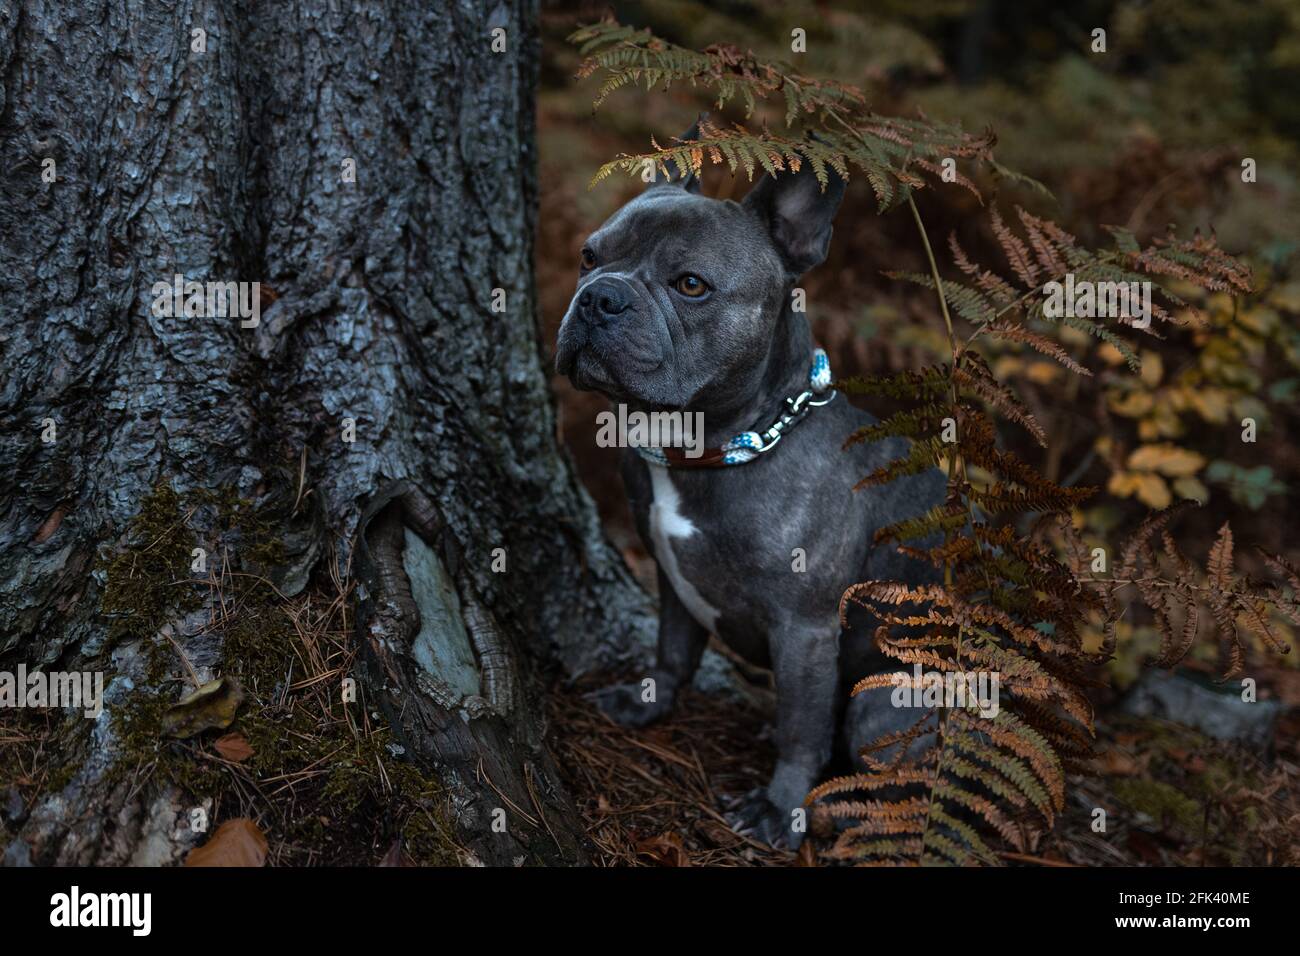 Bulldog francés en una aventura al aire libre en el bosque - explorar el bosque a pie Foto de stock